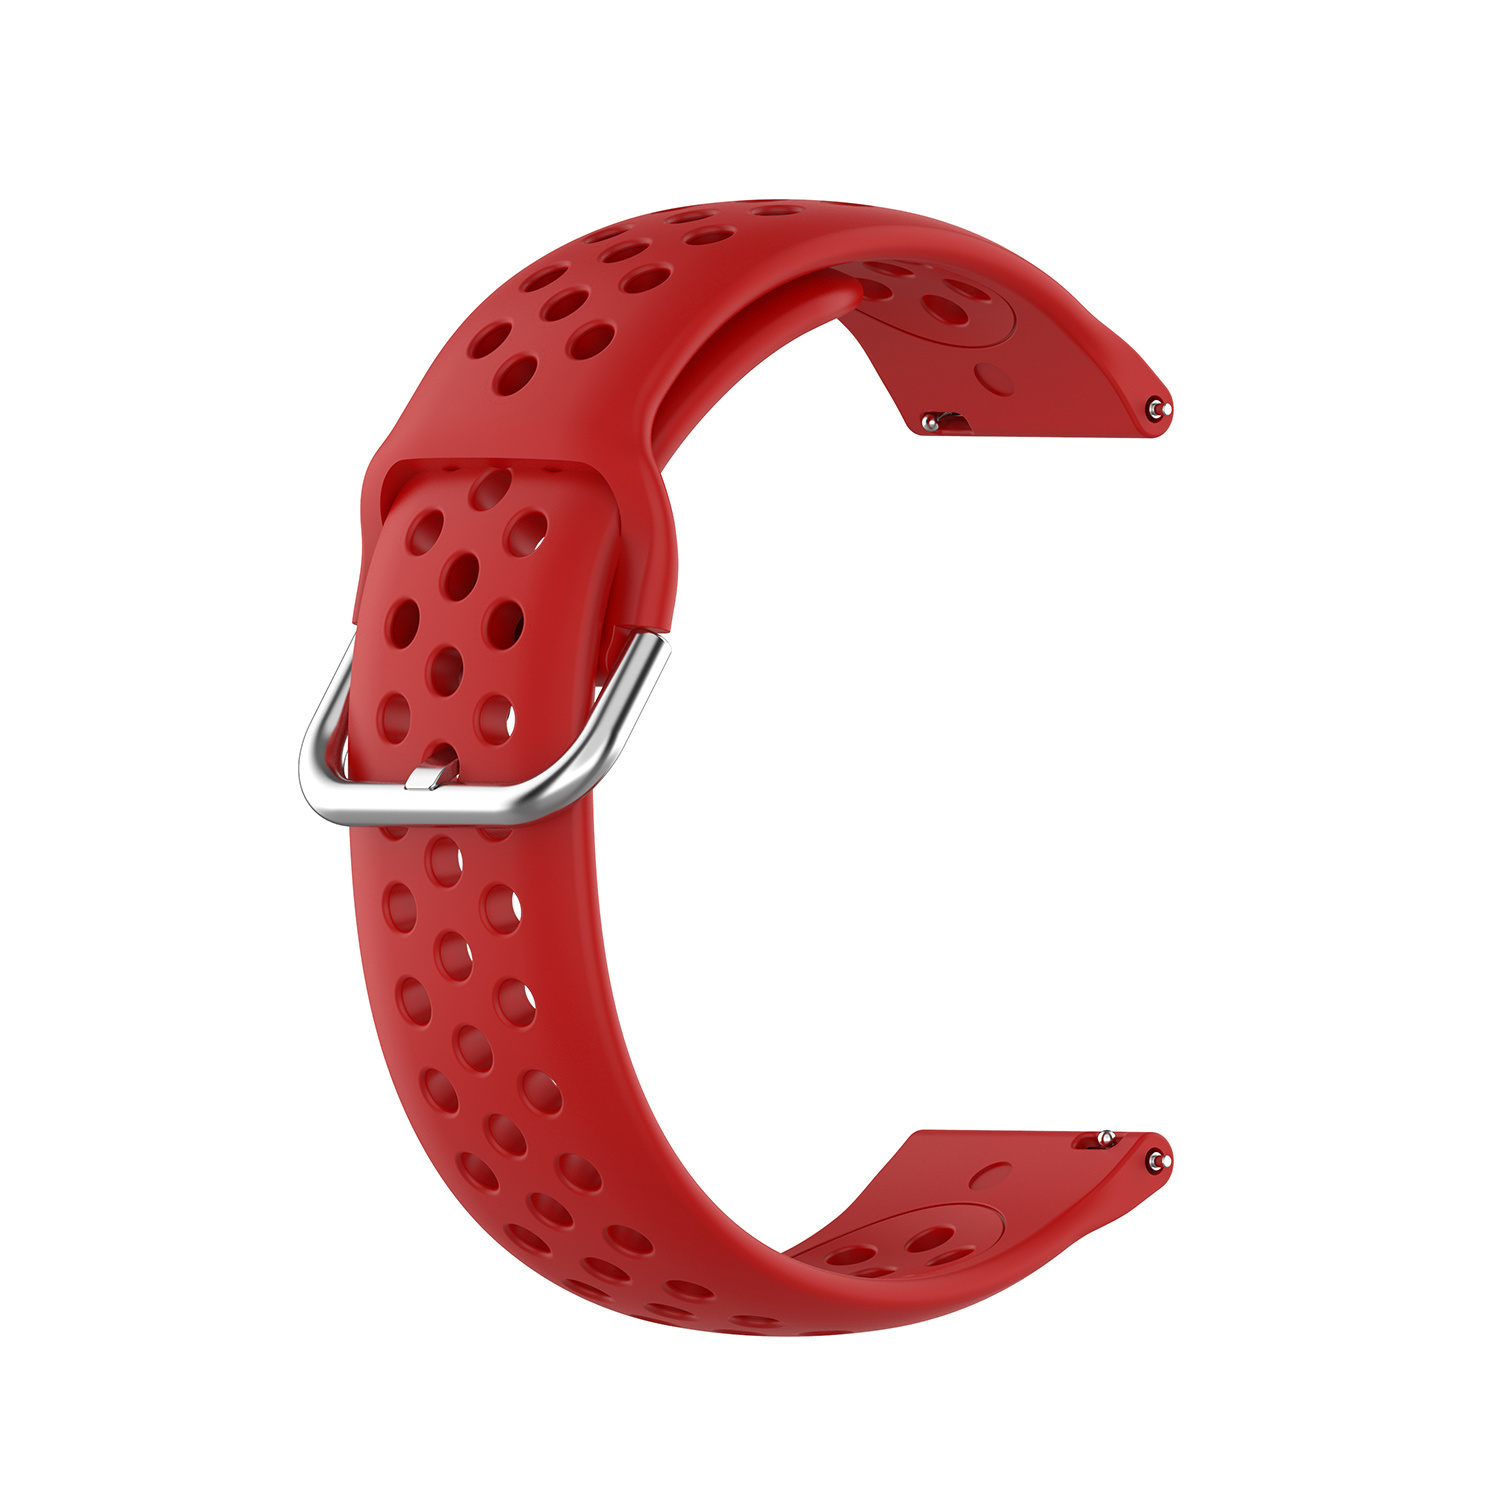 Cinturino doppia fibbia per Samsung Galaxy Watch - rosso